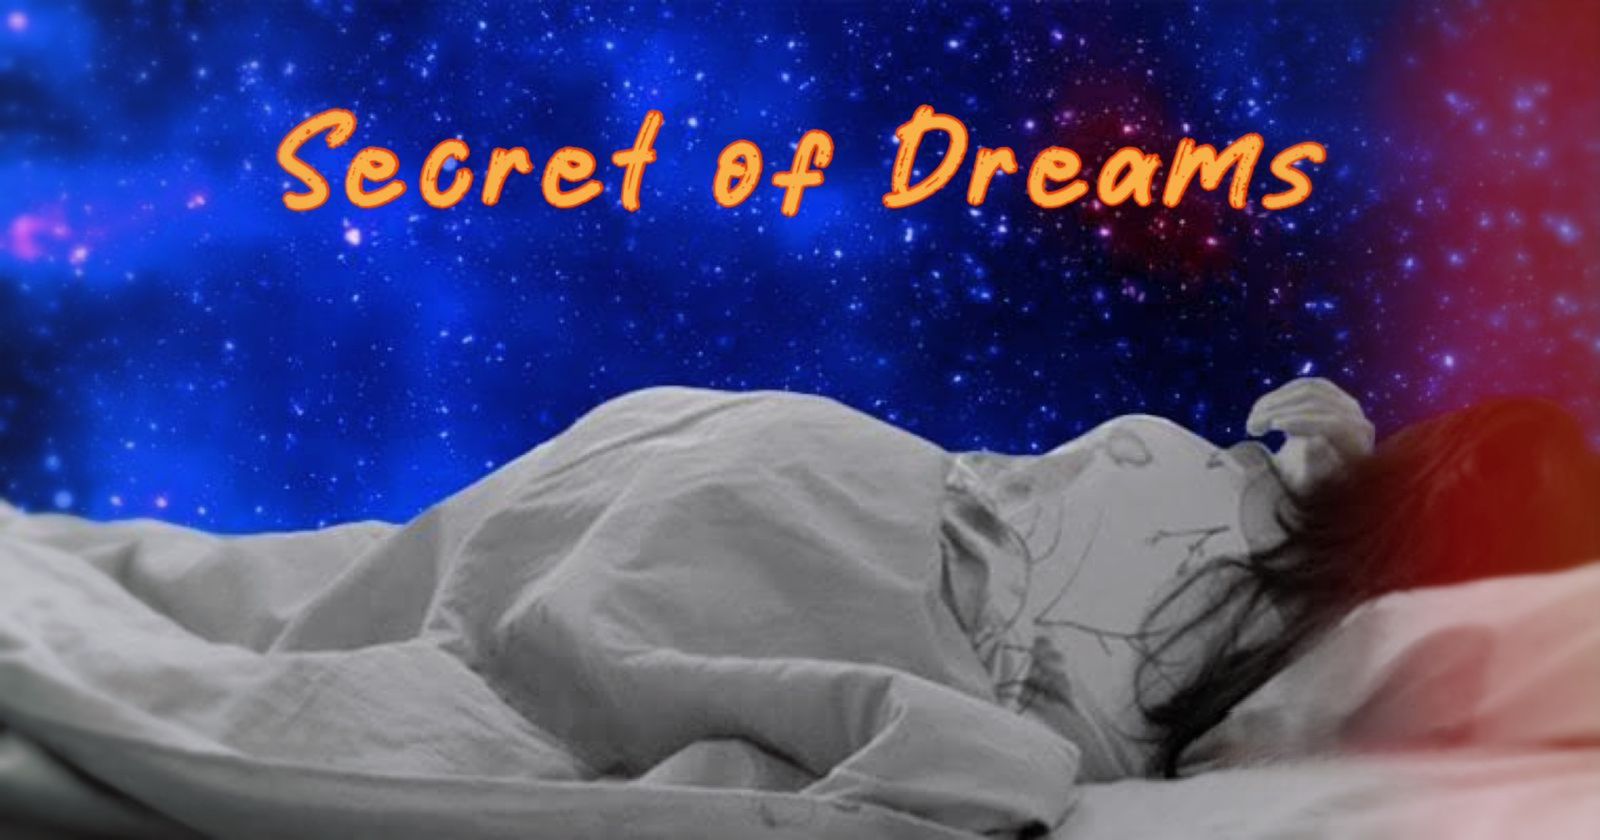 Secret of dreams